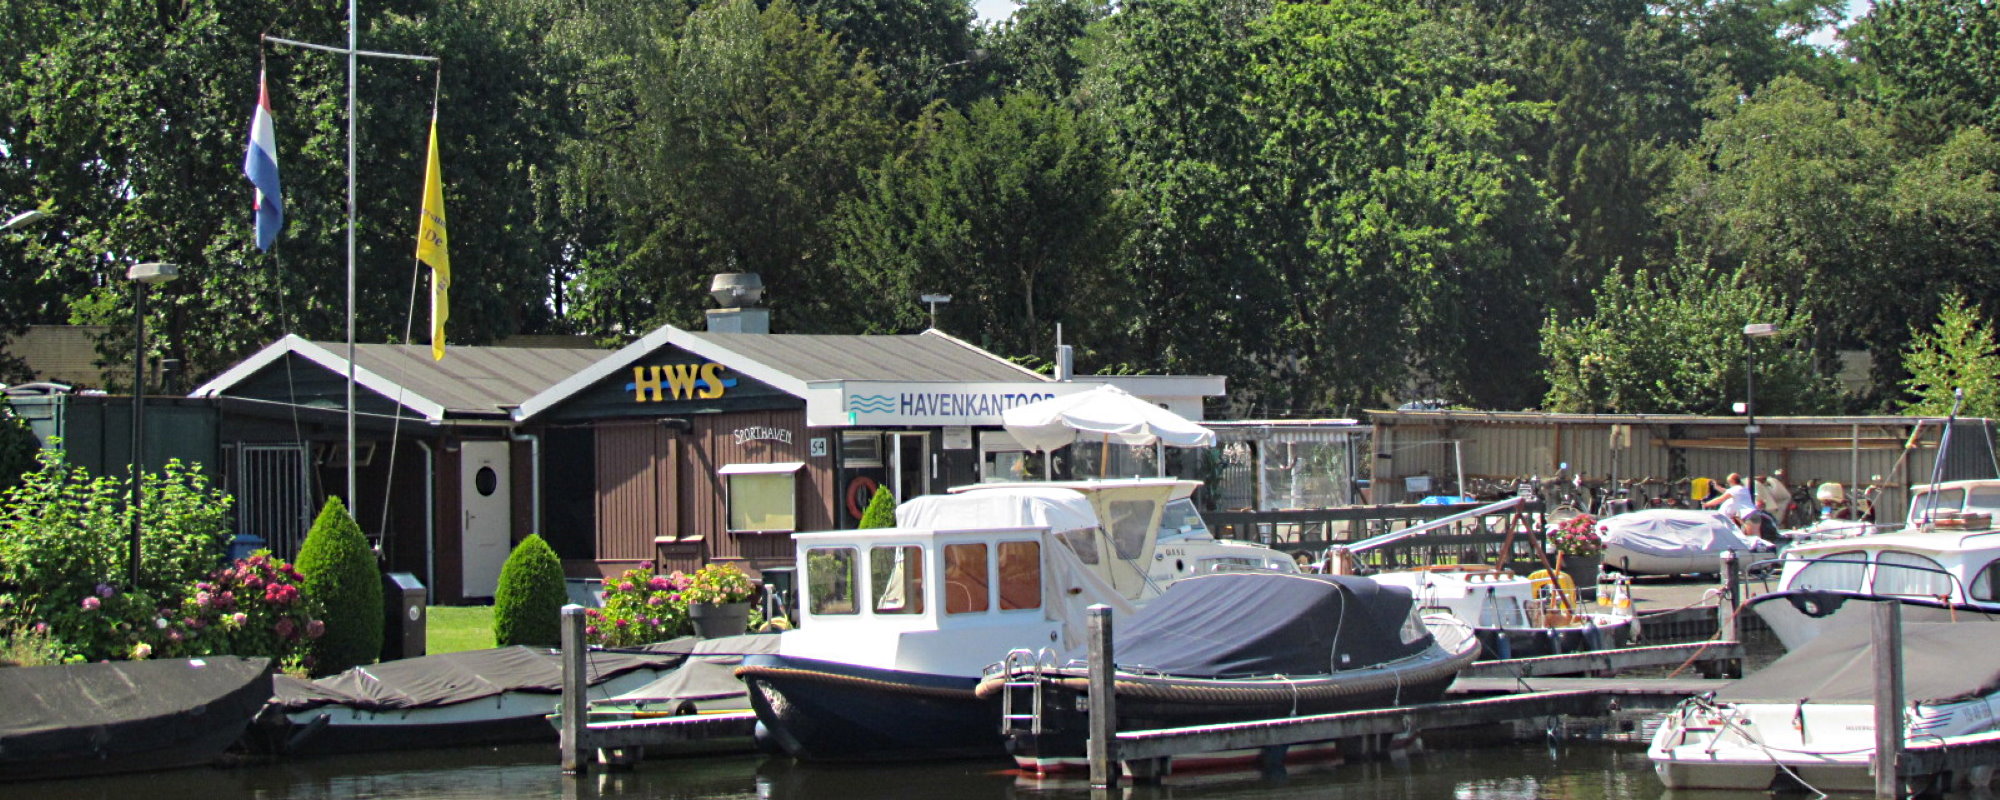 Hilversumse Watersport Vereniging De Sporthaven